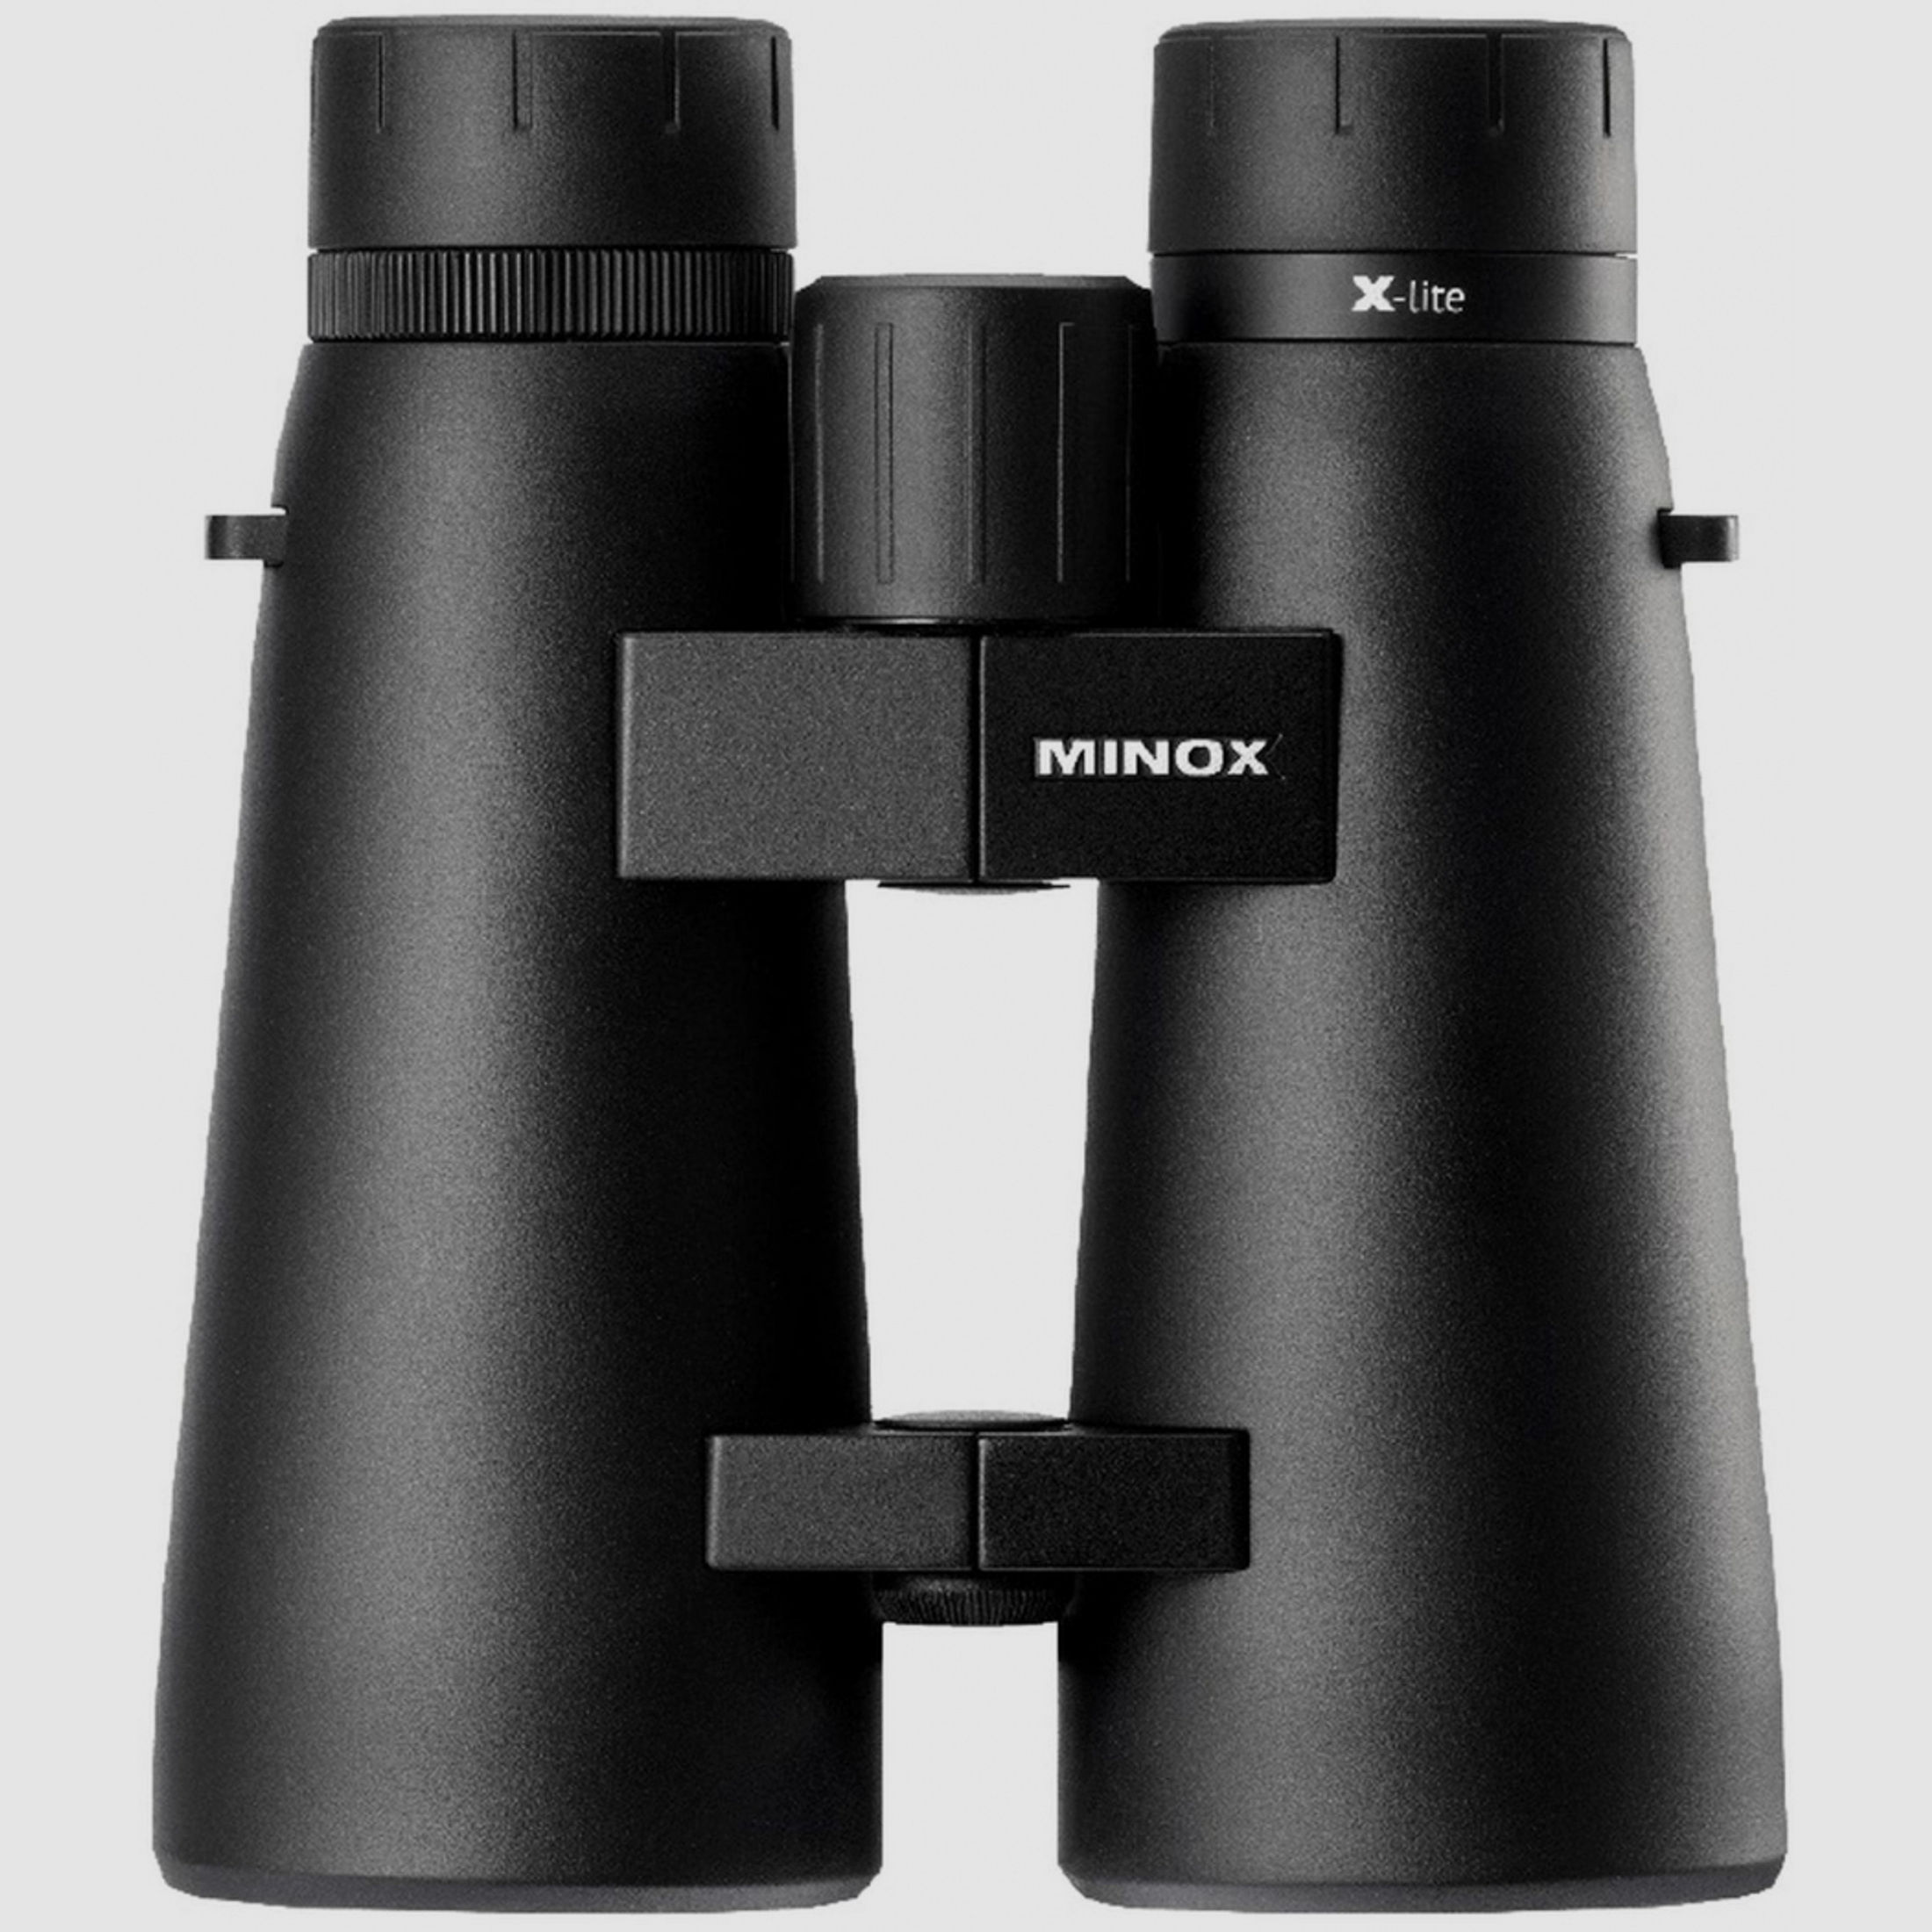 Minox Minox X-lite 8x56 -24,91€ 10% Fernglas Rabatt 224,18 Effektivpreis